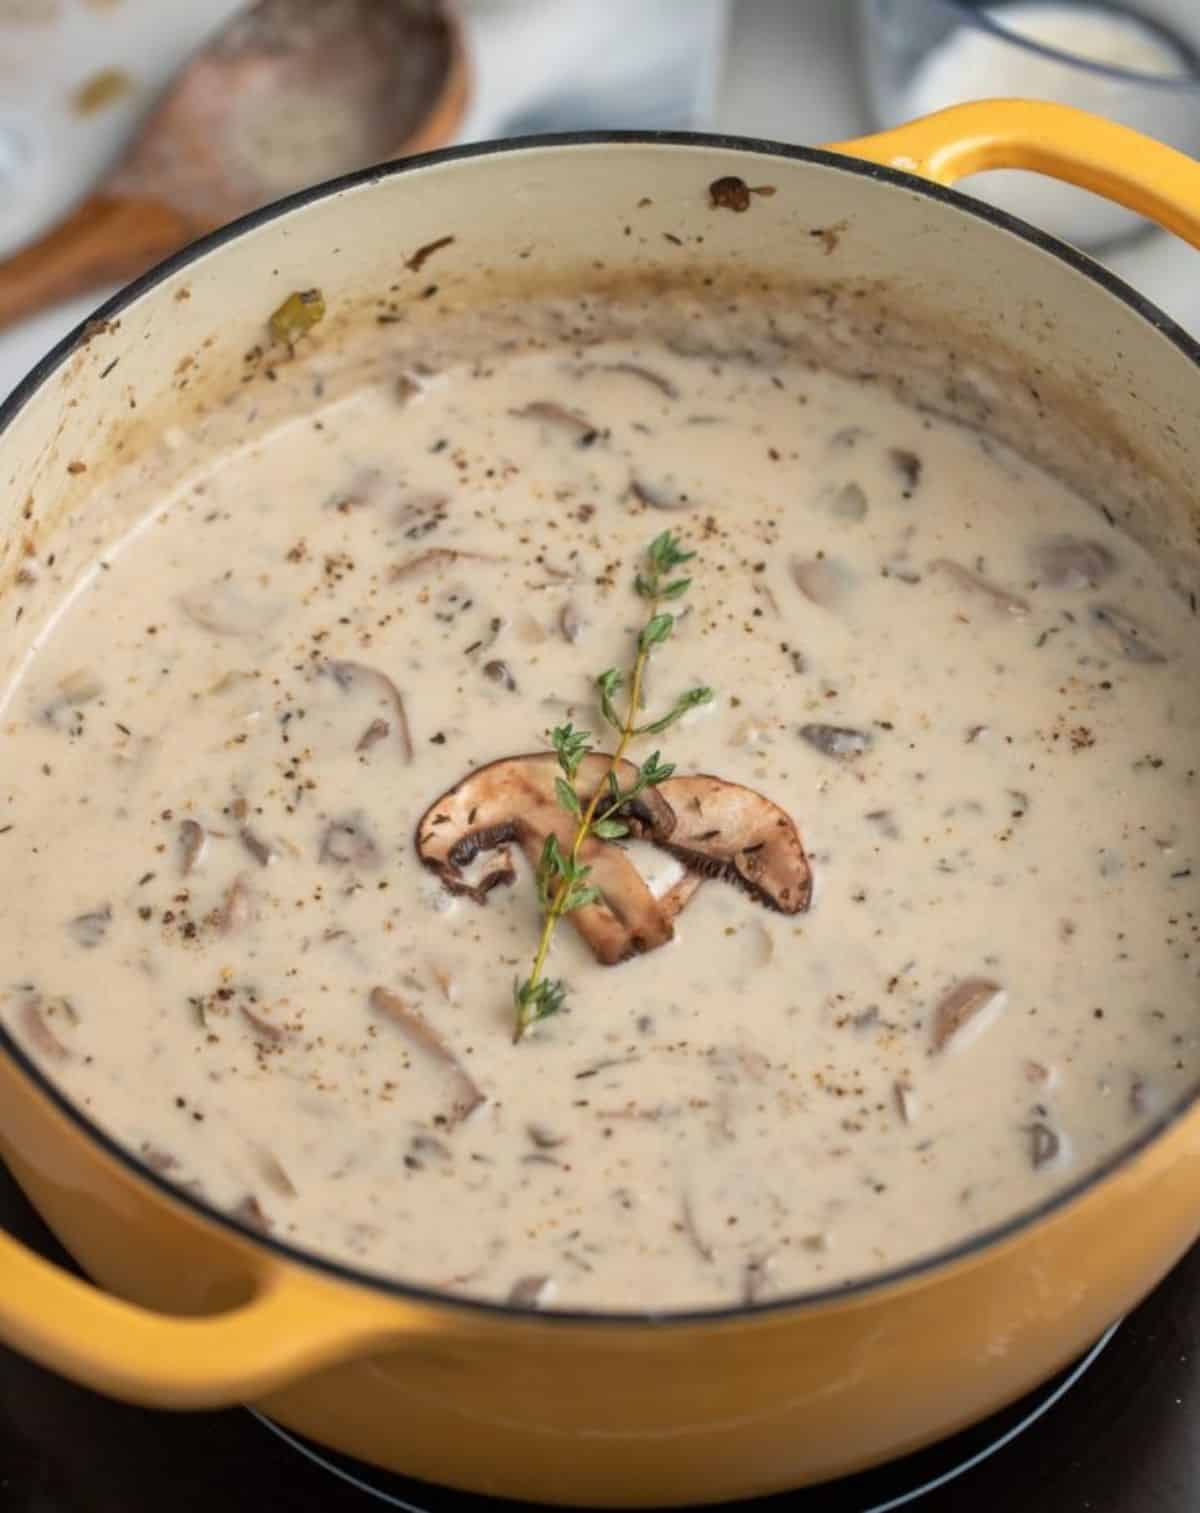 Delicious creamy mushroom soup in a pot.